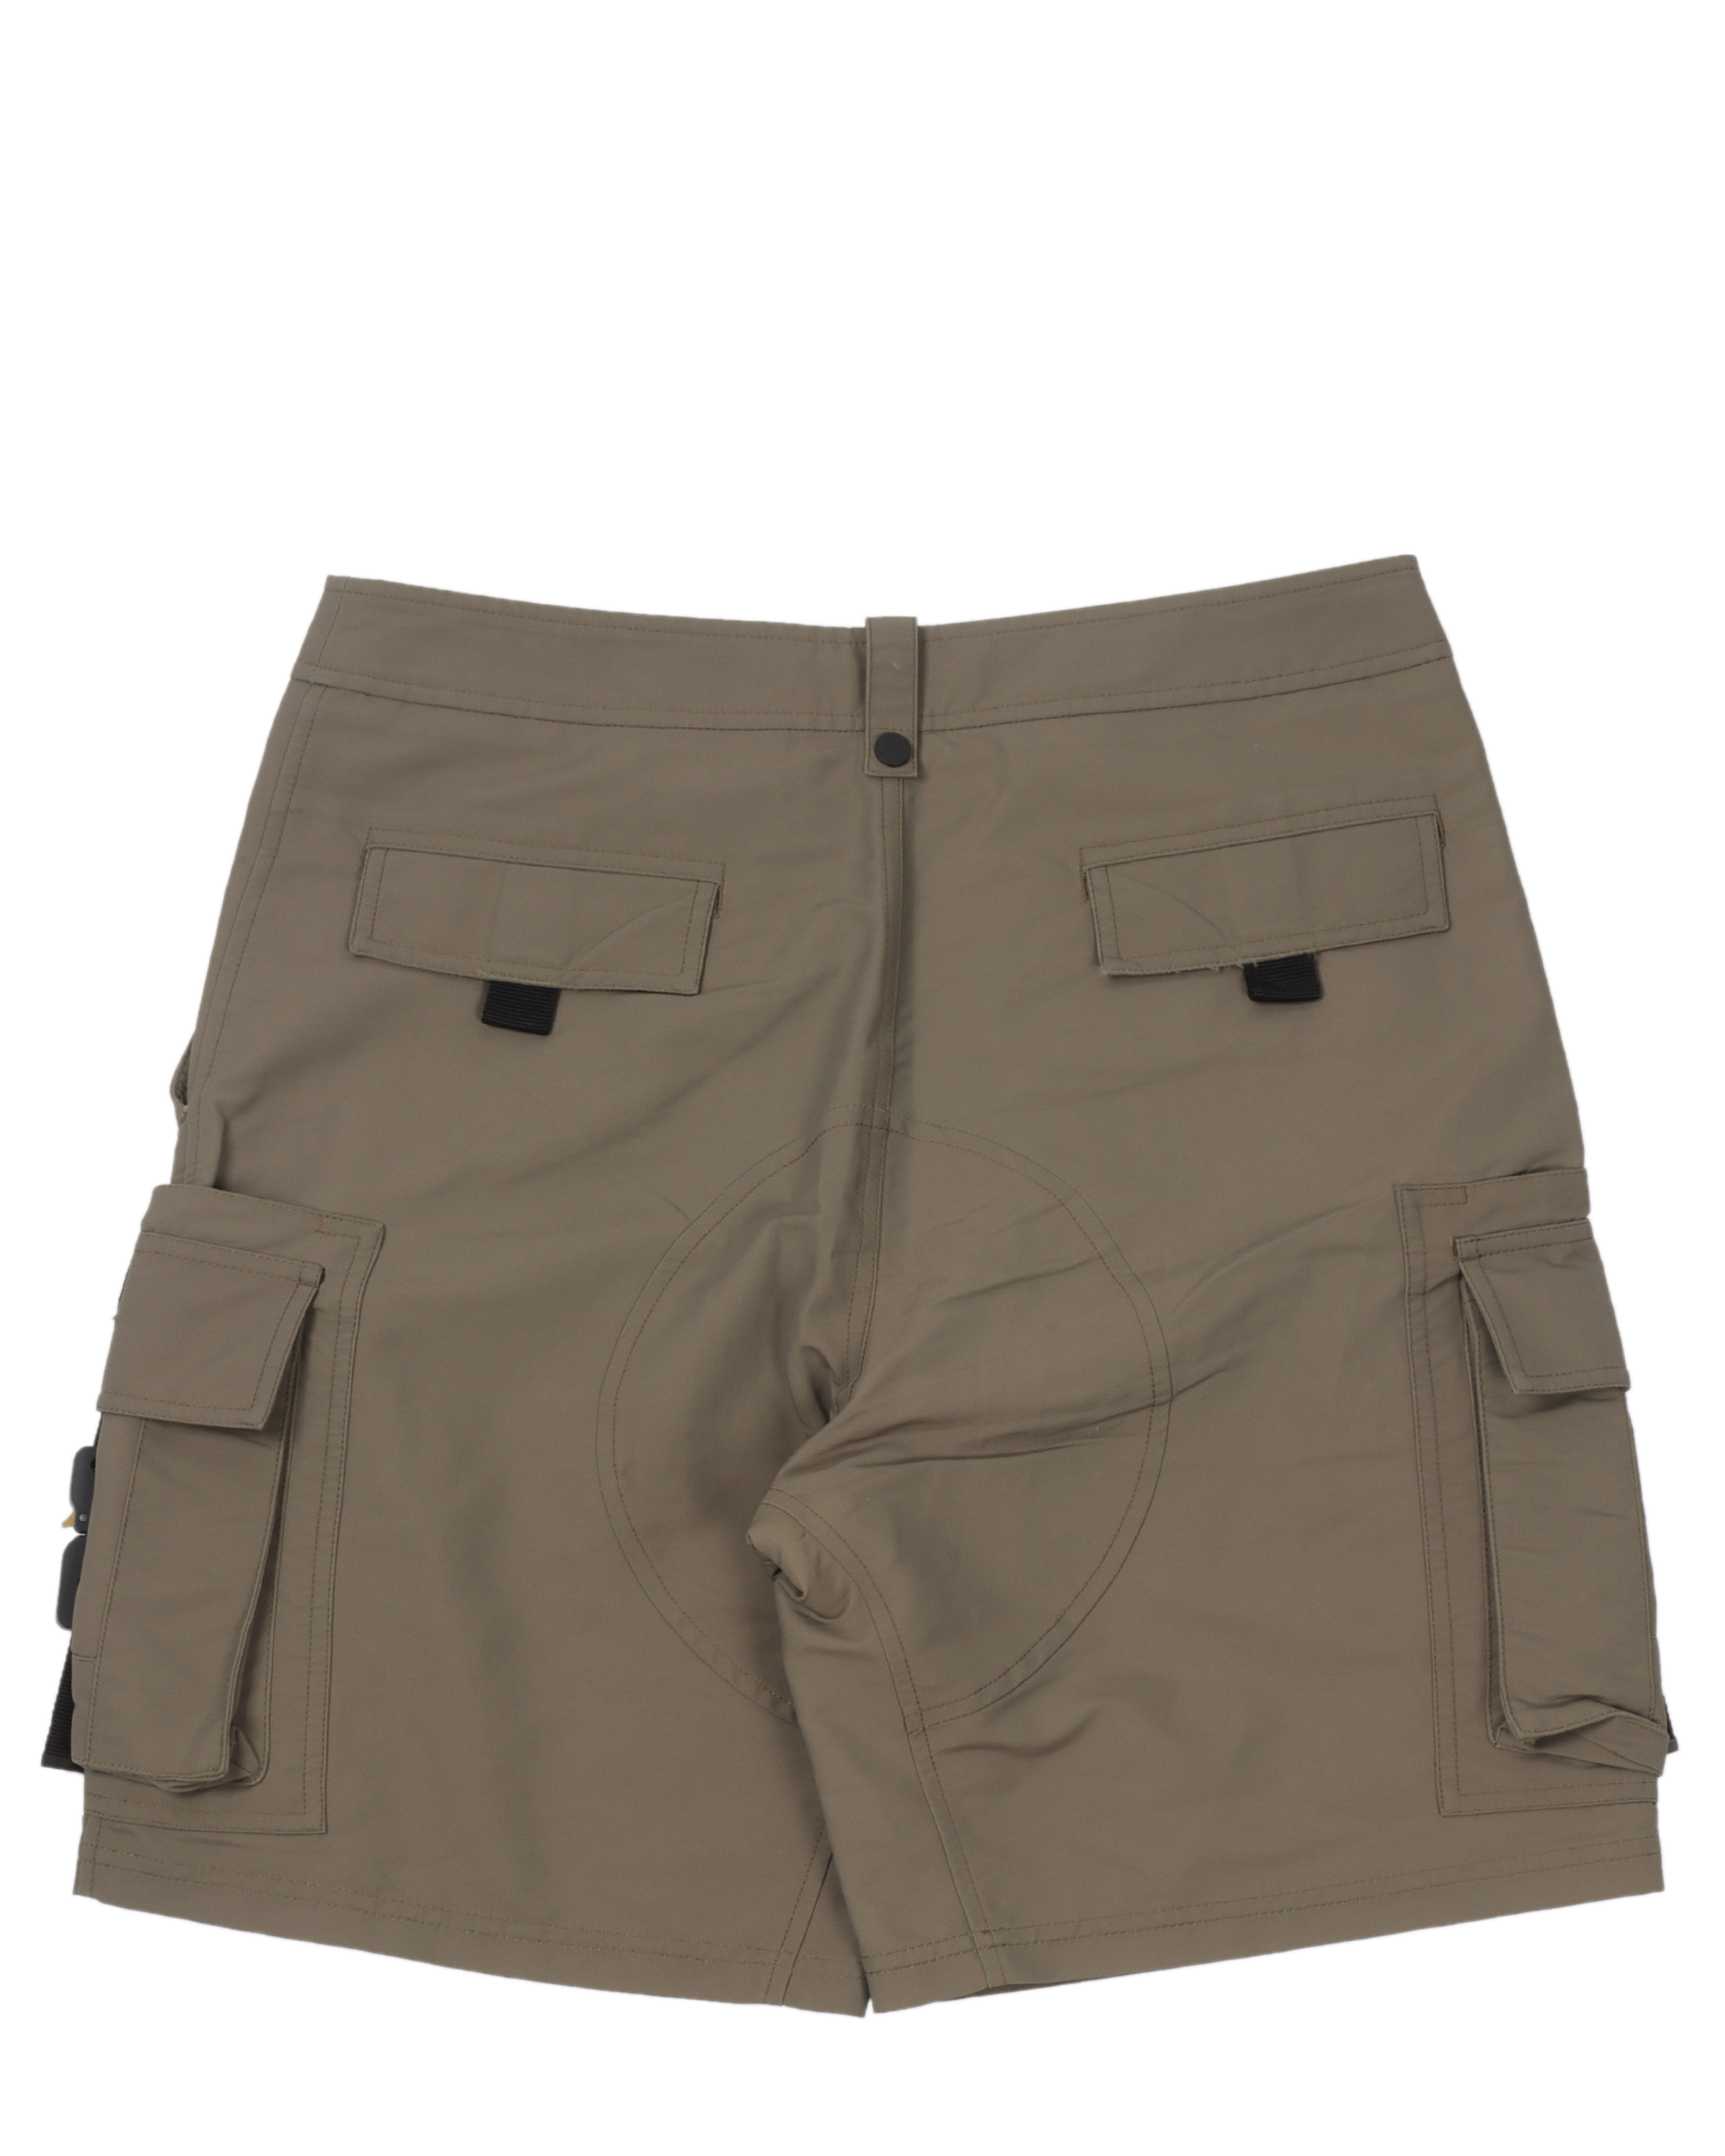 Alyx Buckle Cargo Shorts